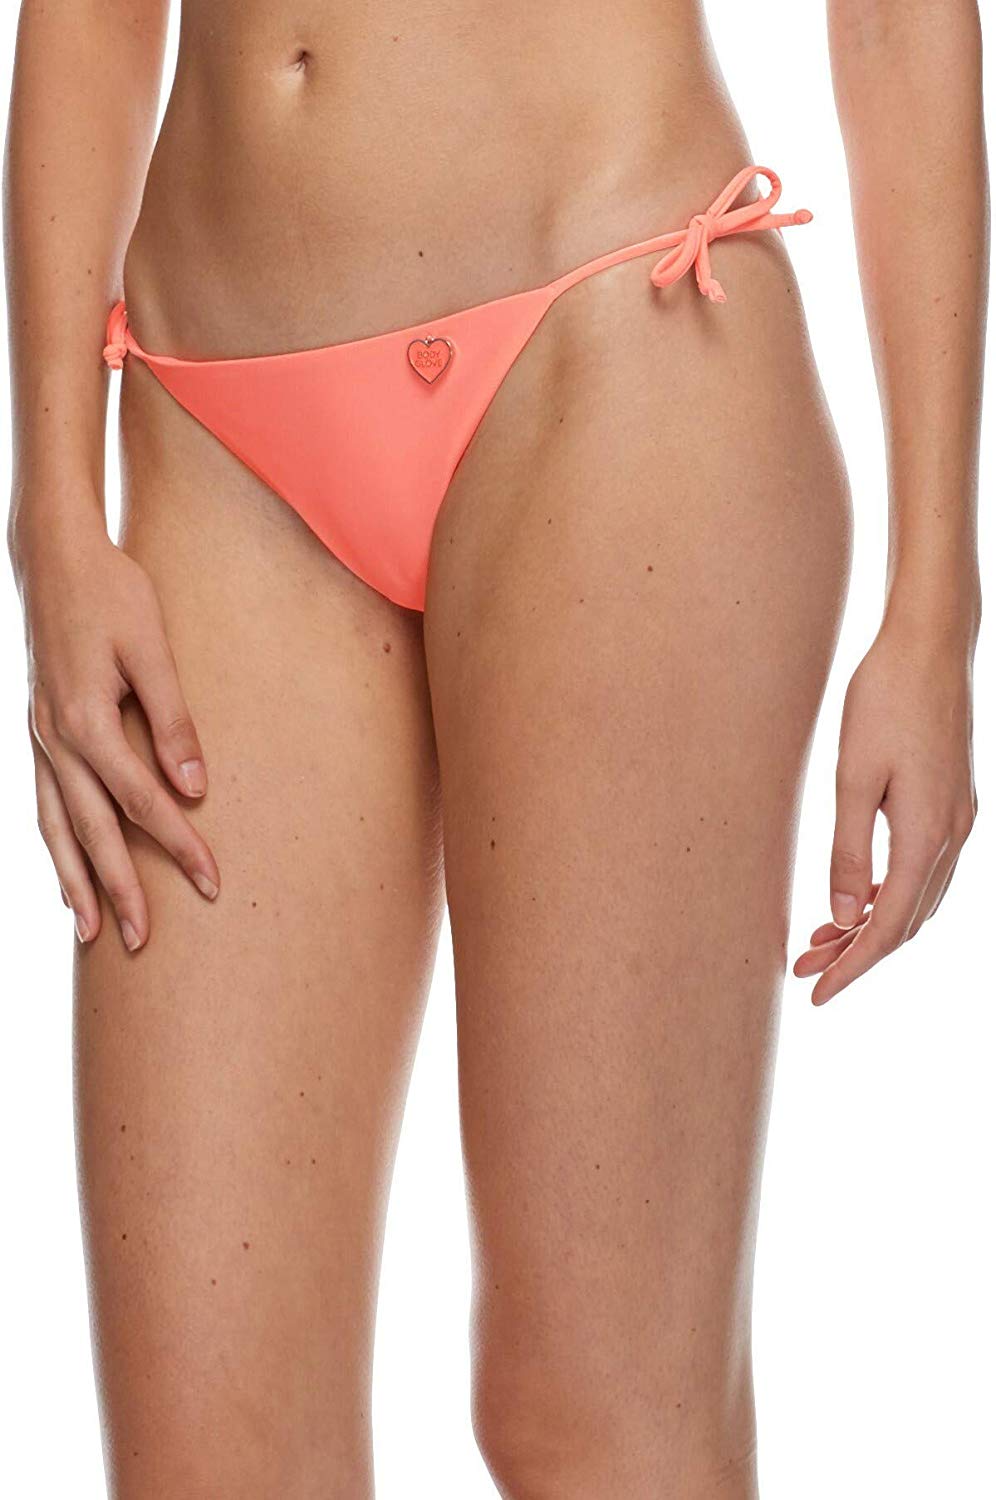 Body Glove Women's Smoothies Iris Solid Tie Side Bikini Bottom Swimsuit - image 3 of 4